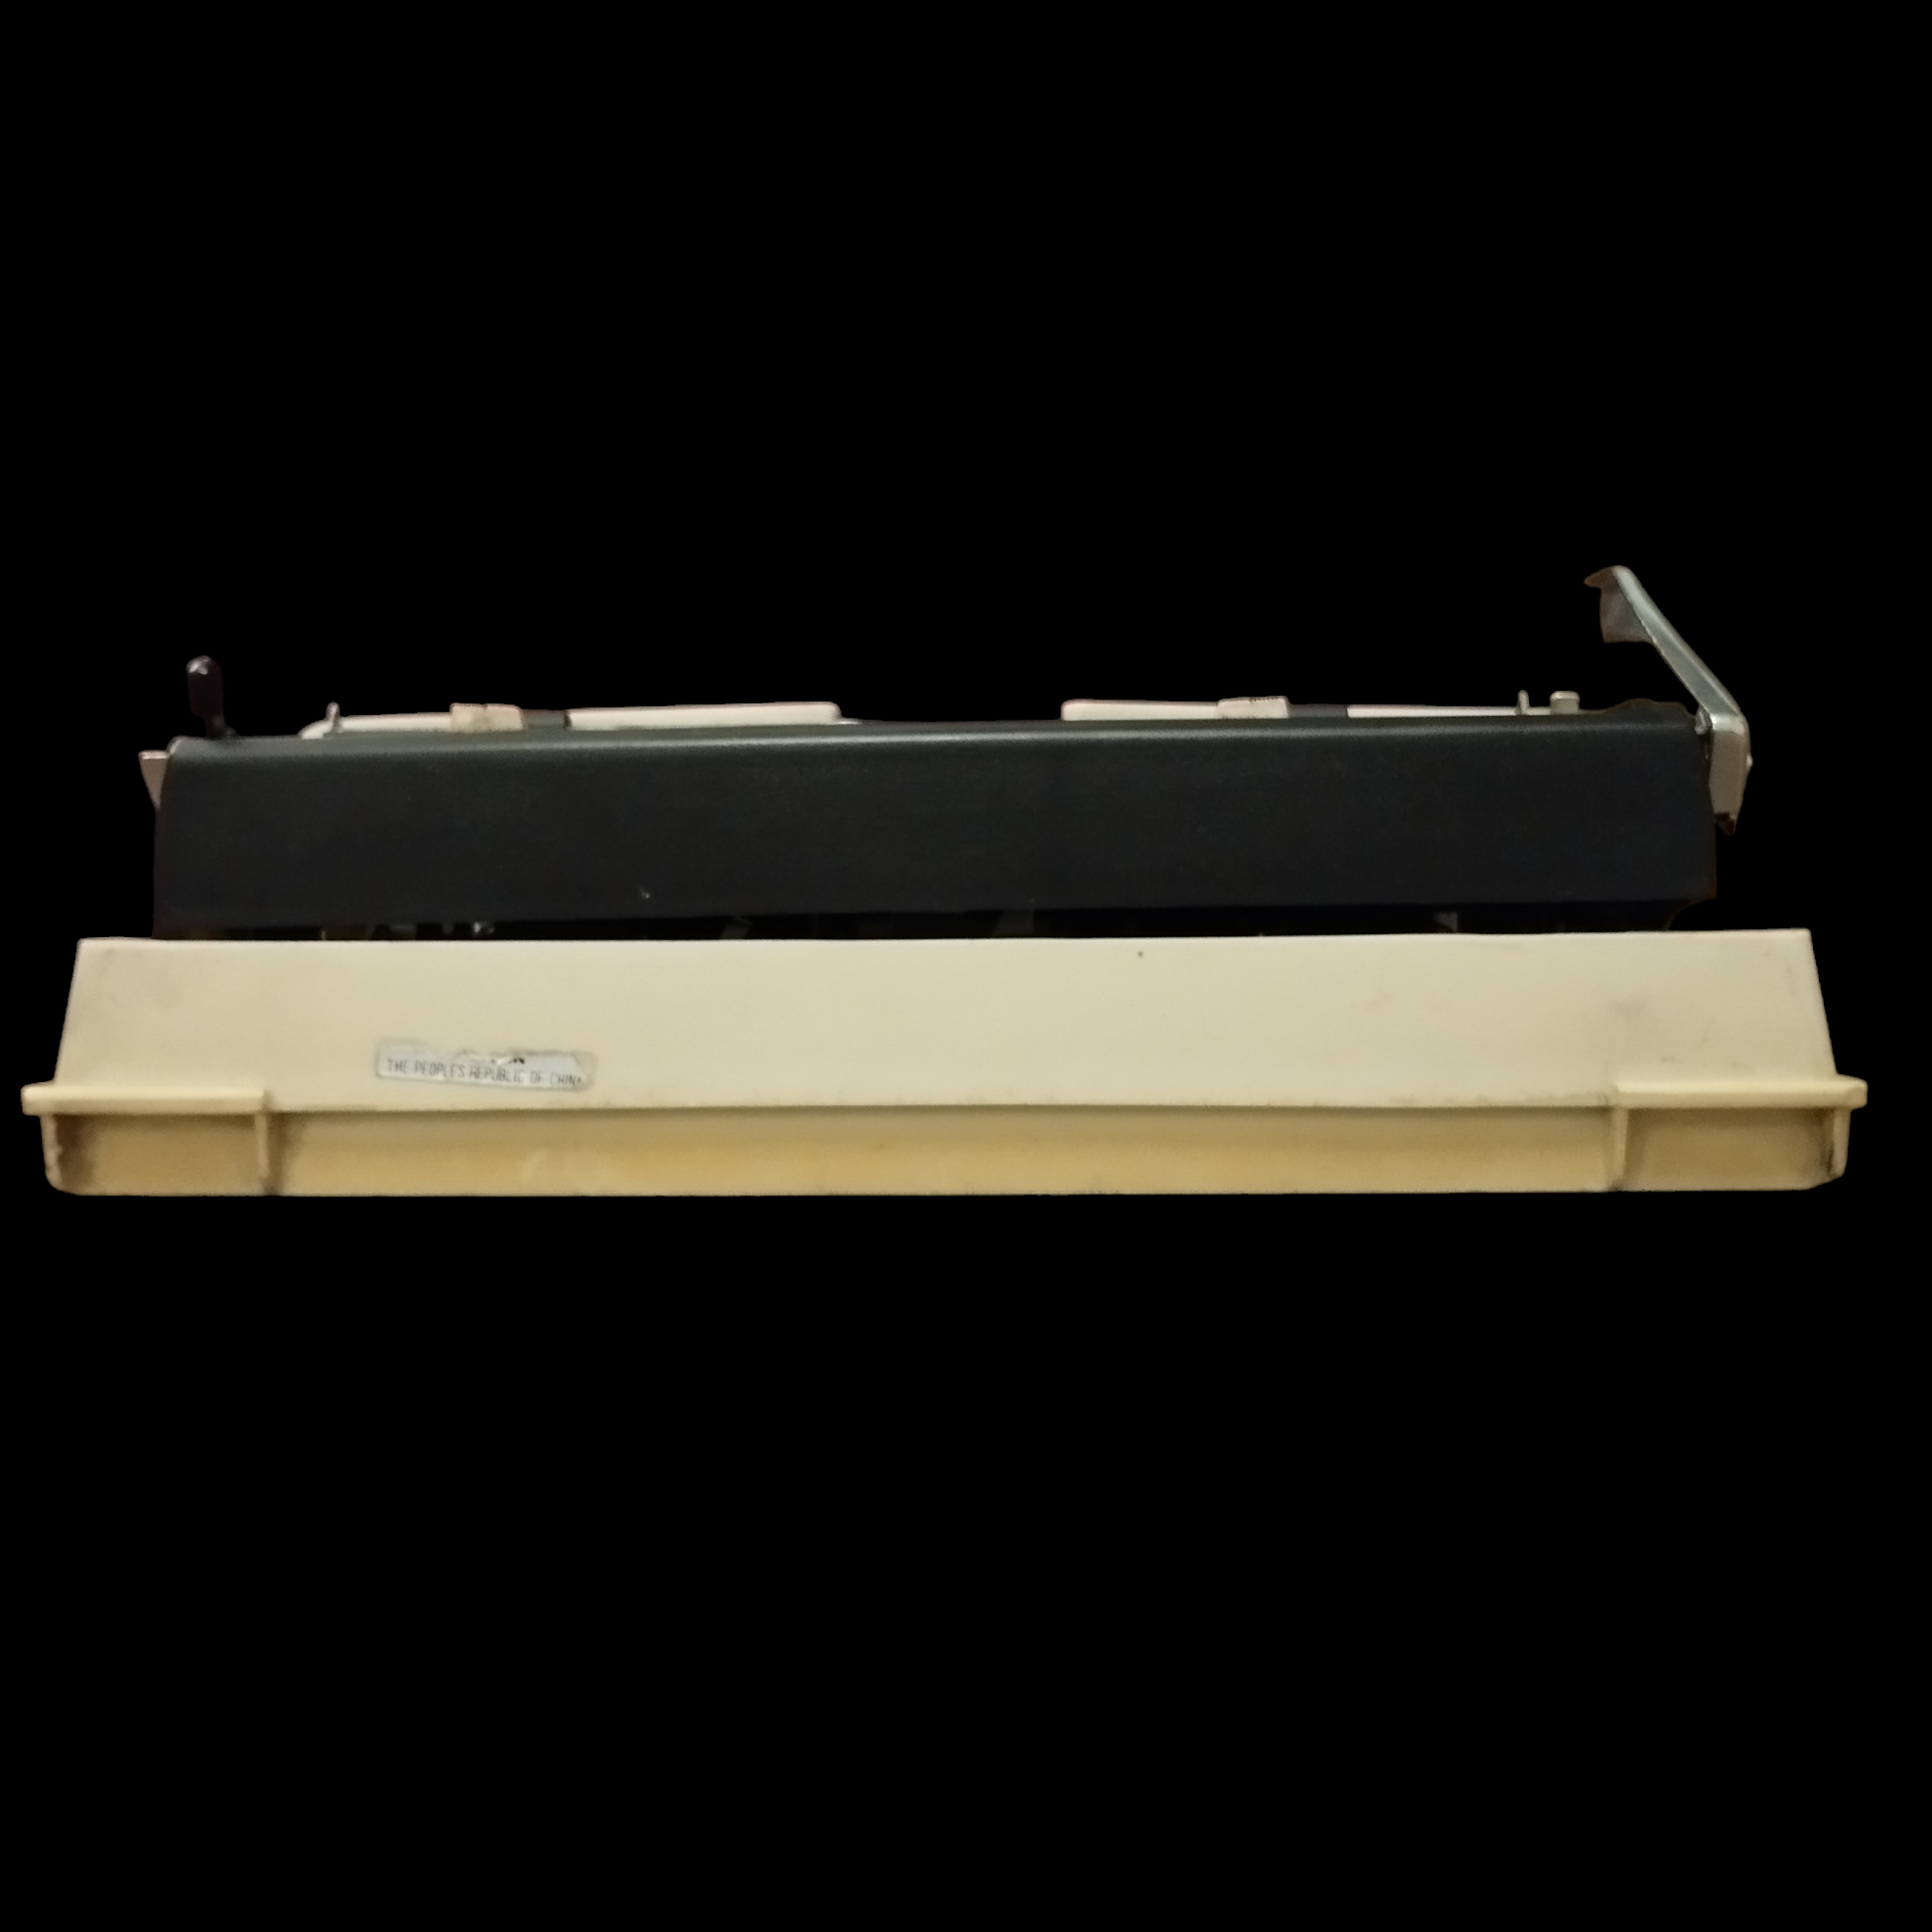 Image of KOFA 300 Typewriter. Available from universaltypewritercompany.in